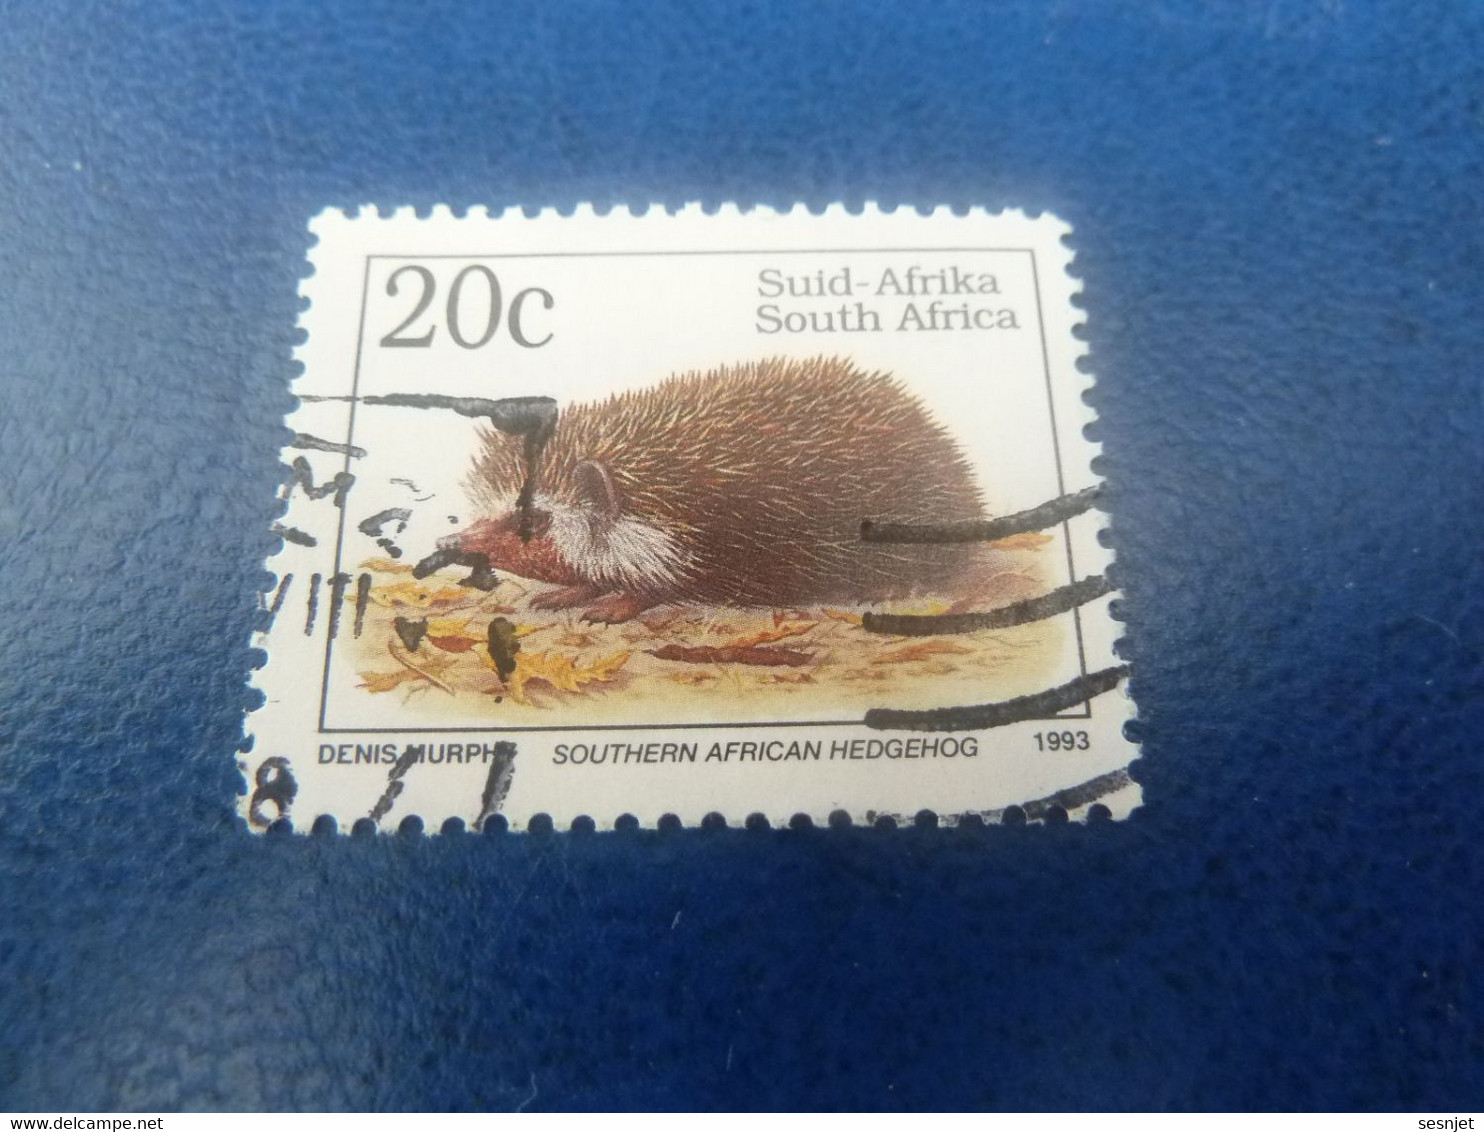 Suid-Africa - South Africa - Southern African Hedgehog - 20c. - Multicolore - Oblitéré - Année 1993 - - Usati